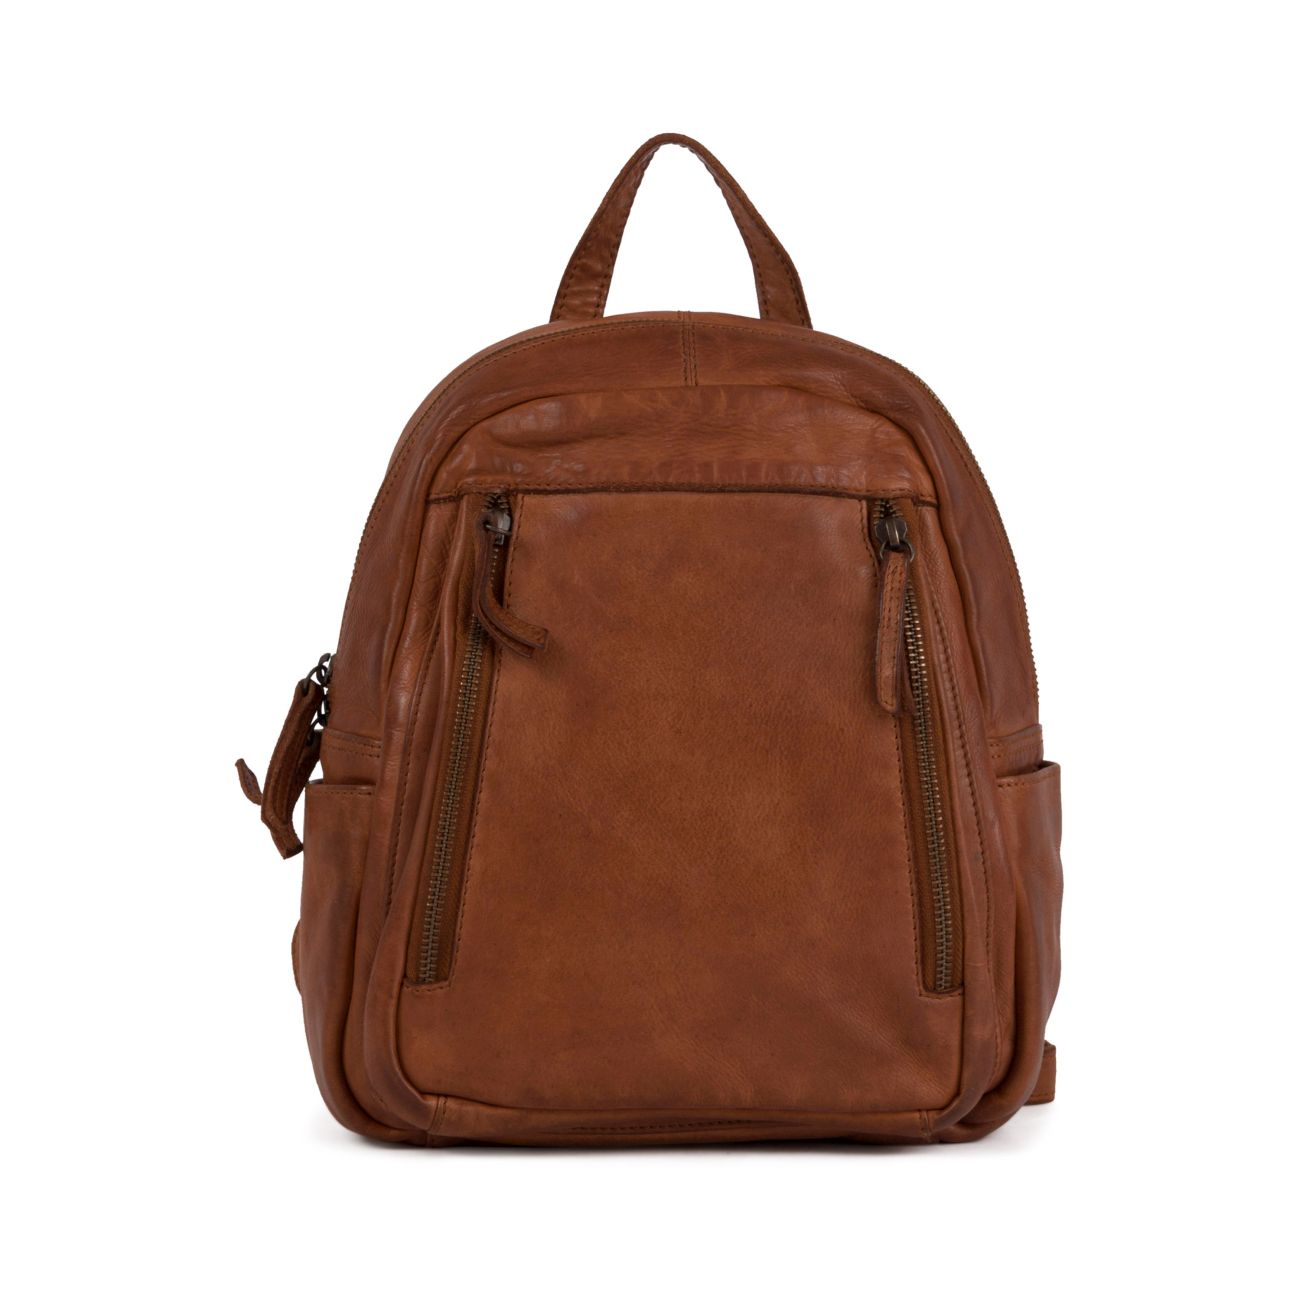 Deva Cognac Leather Backpack